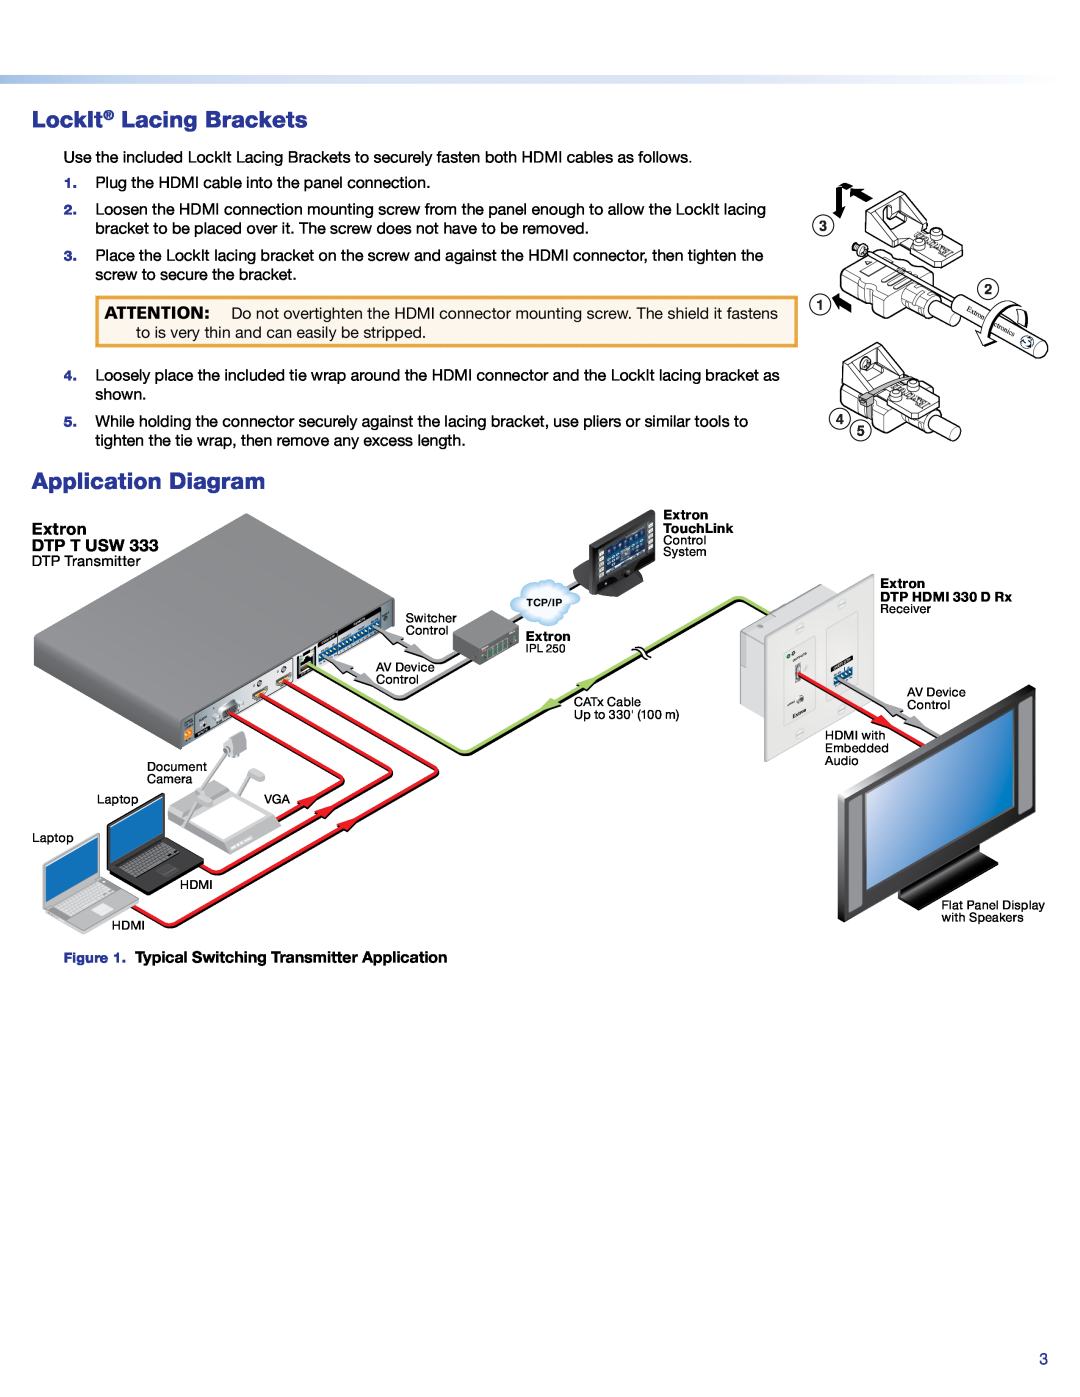 Extron electronic DTP T USW 333 setup guide LockIt Lacing Brackets, Application Diagram, Extron DTP T USW 